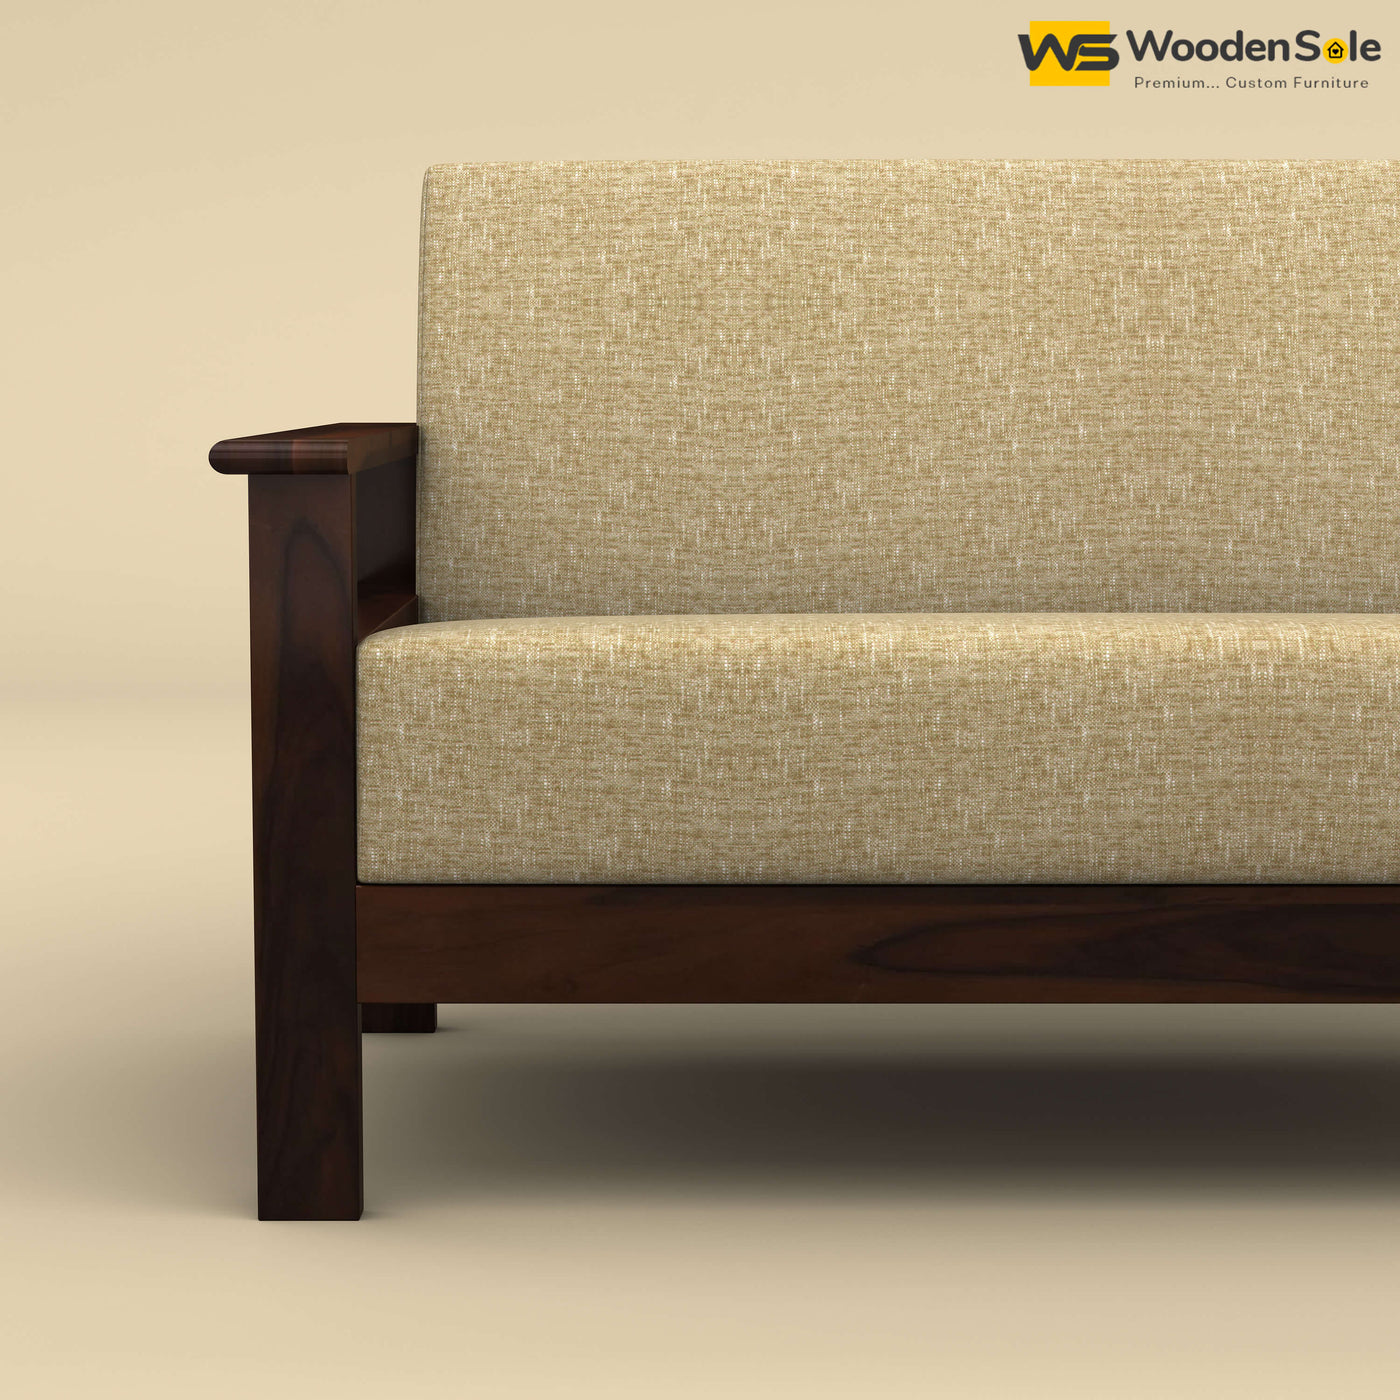 Edwin 2 Seater Wooden Sofa (Walnut Finish)